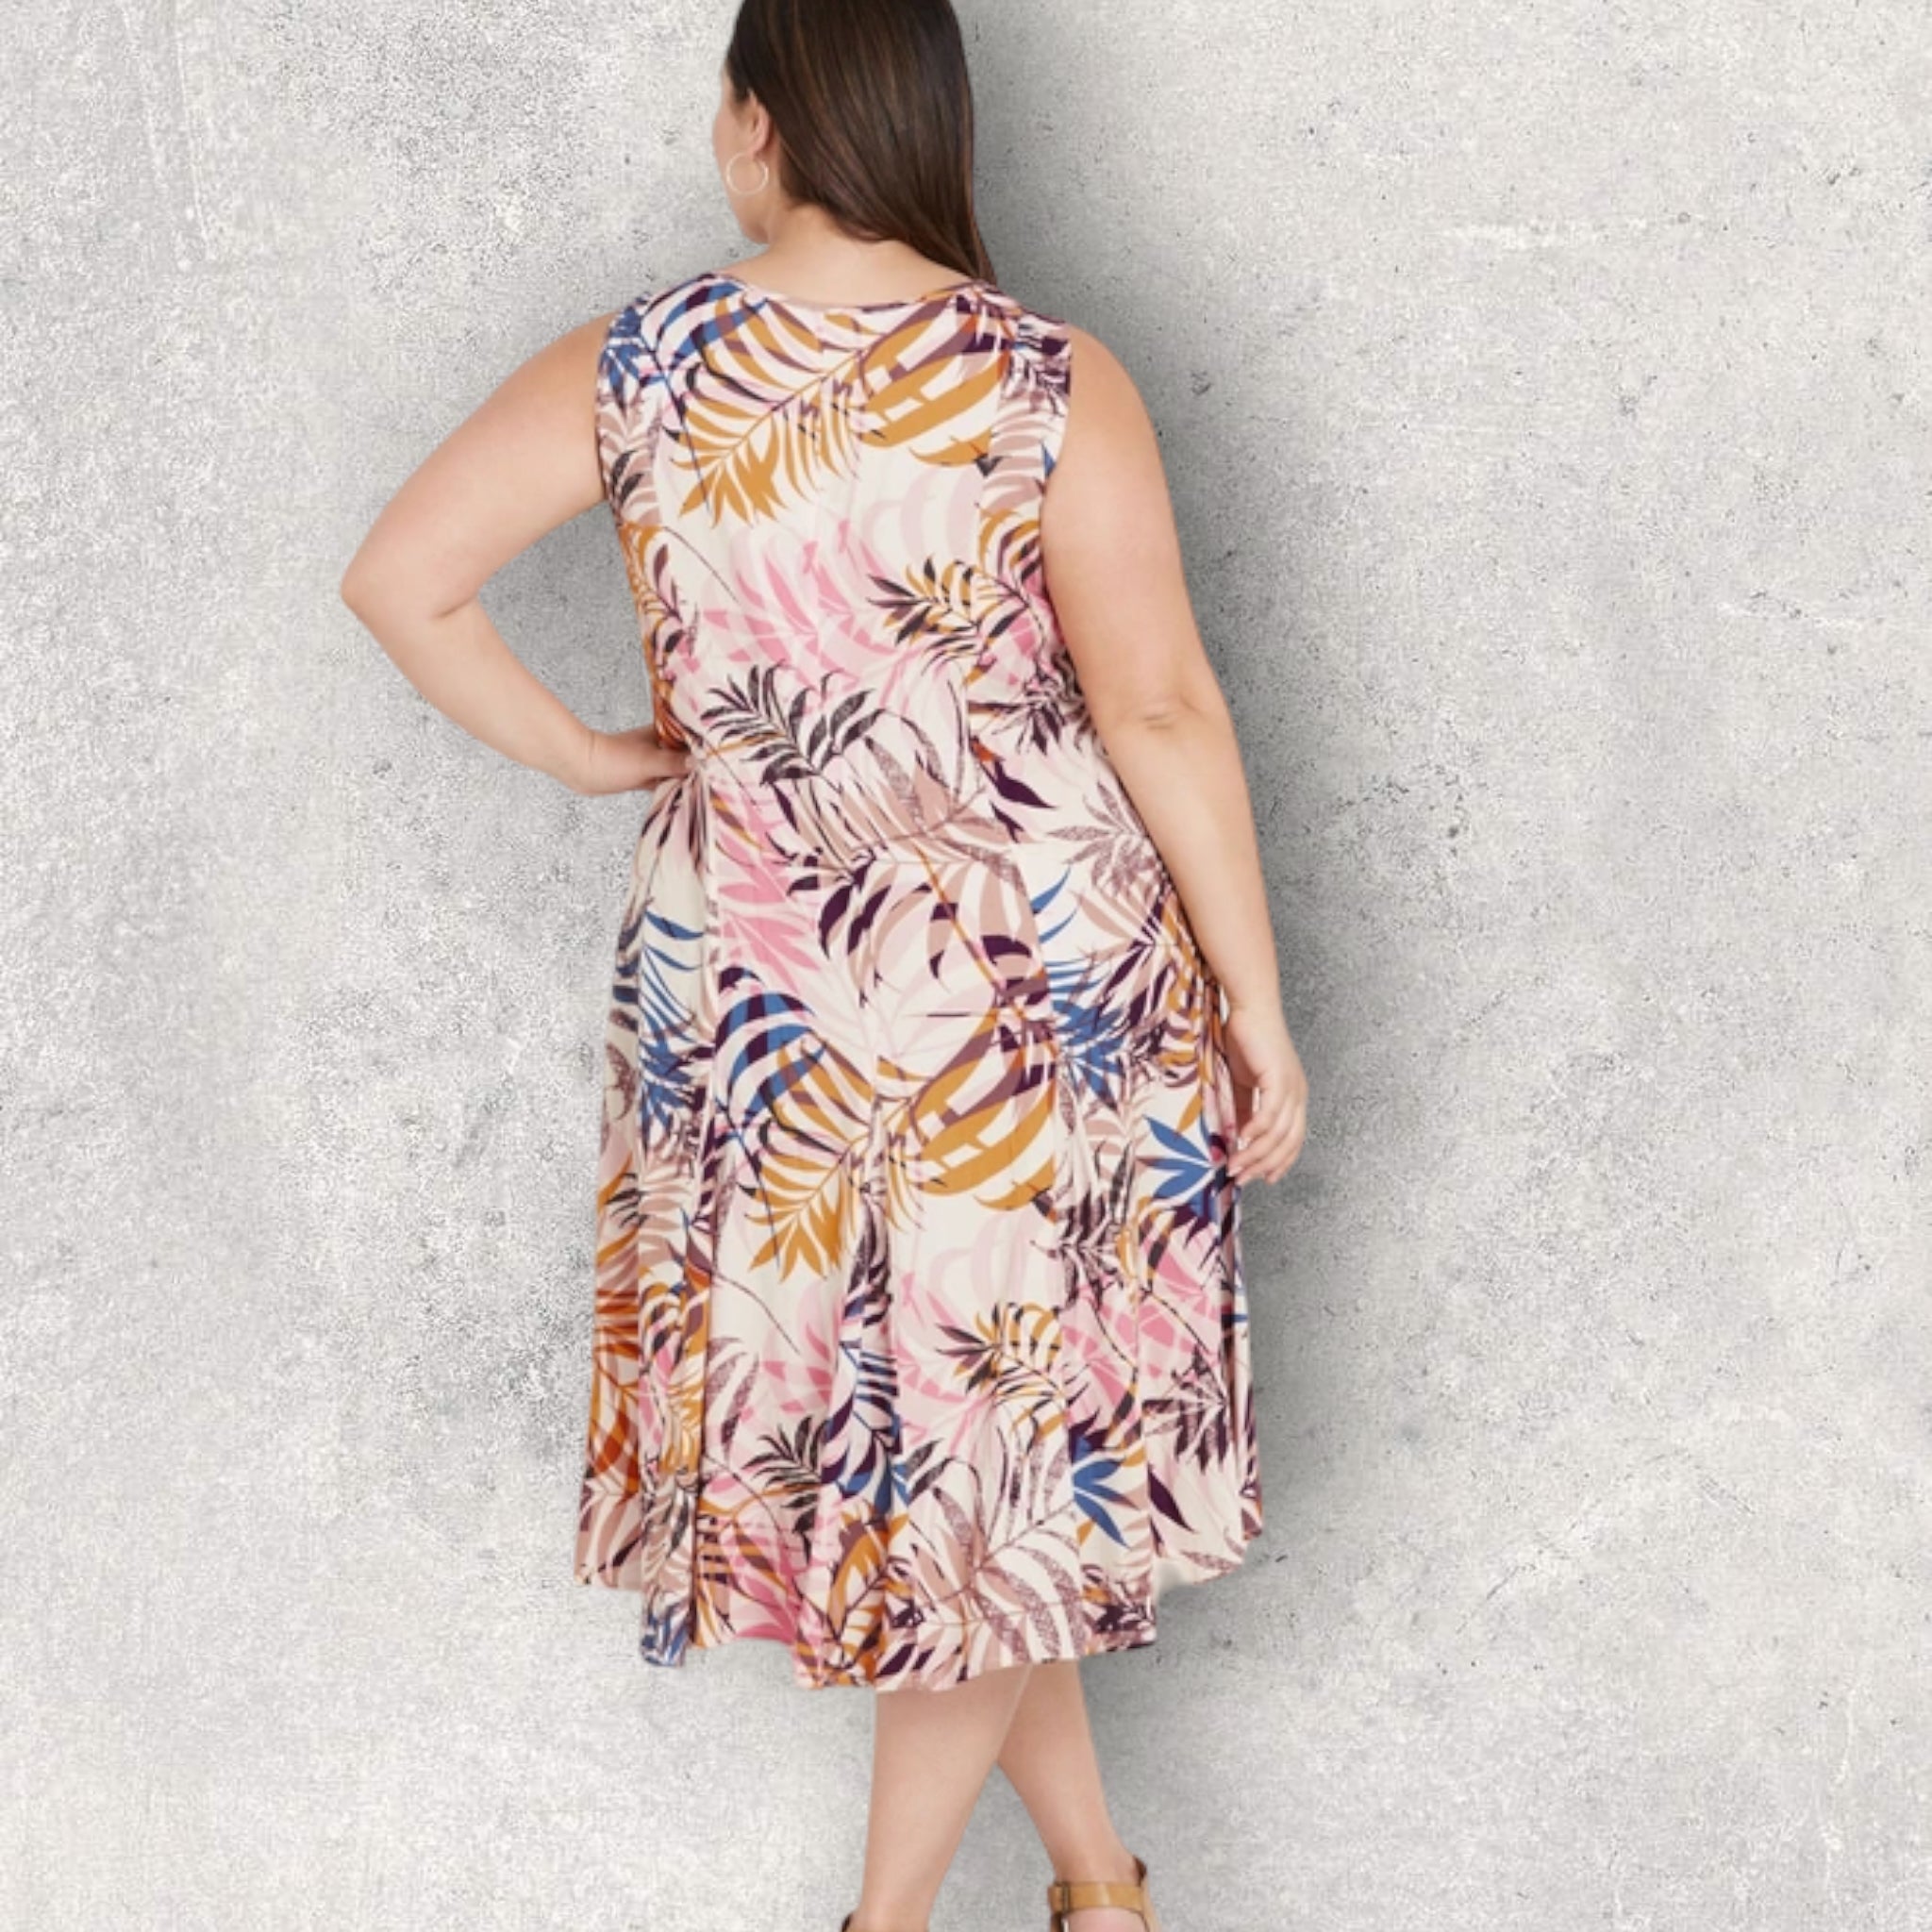 BEME Tropical Print Sleeveless Pintuck Midi Dress - Size 20